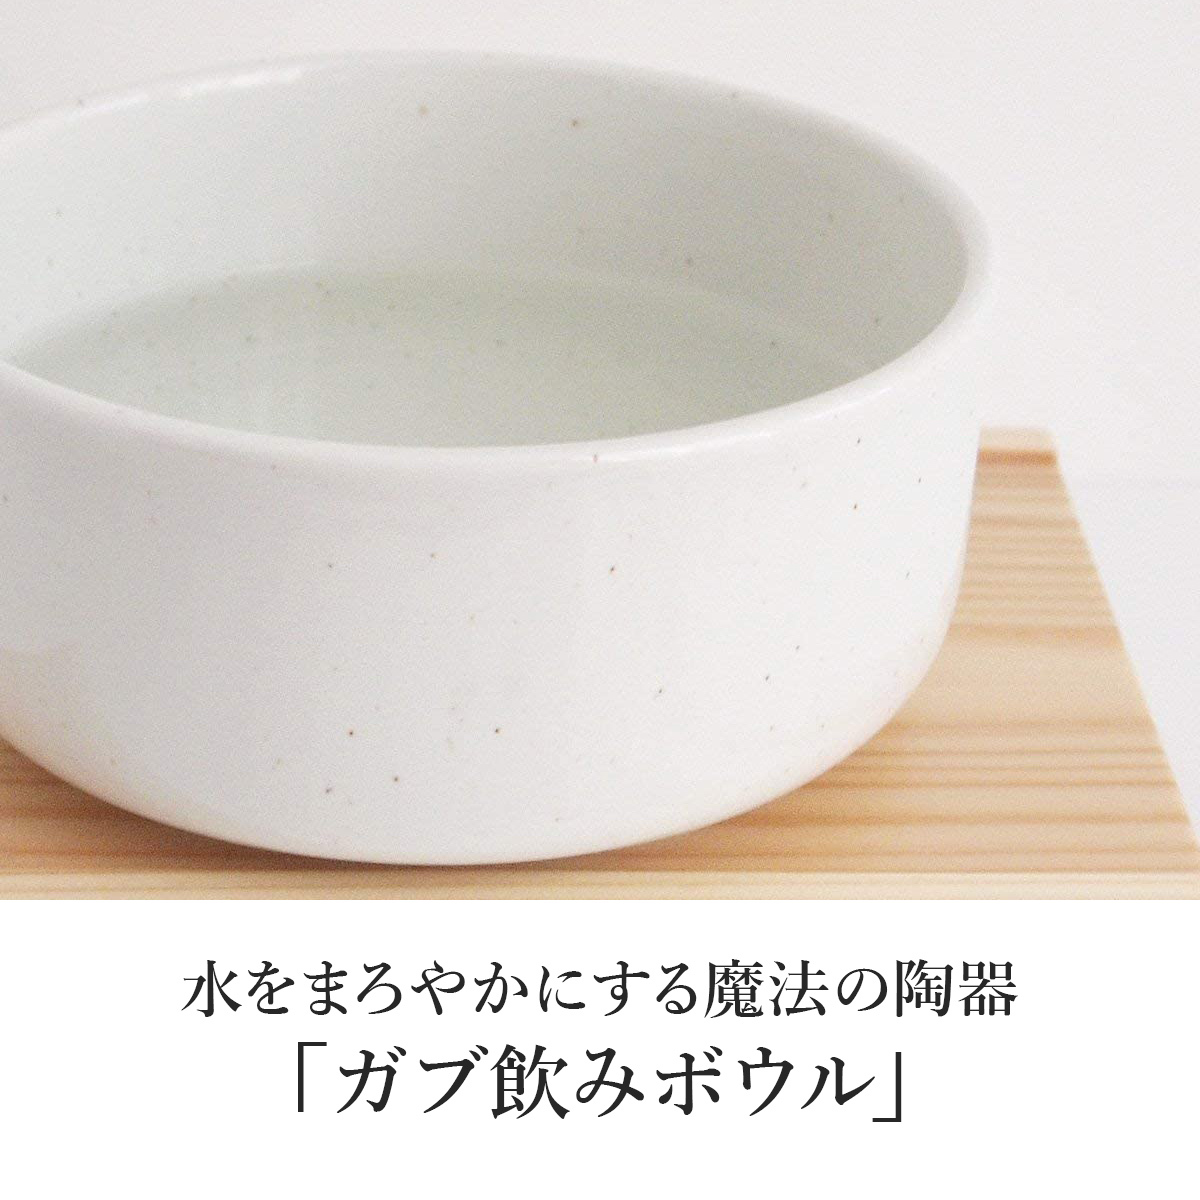  ад s вода миска M белый зеленый размер кошка кошка .. вода .. тарелка посуда вода inserting керамика стакан собака o-katsu мытье ....... возврат . трудно вода тарелка aukatz